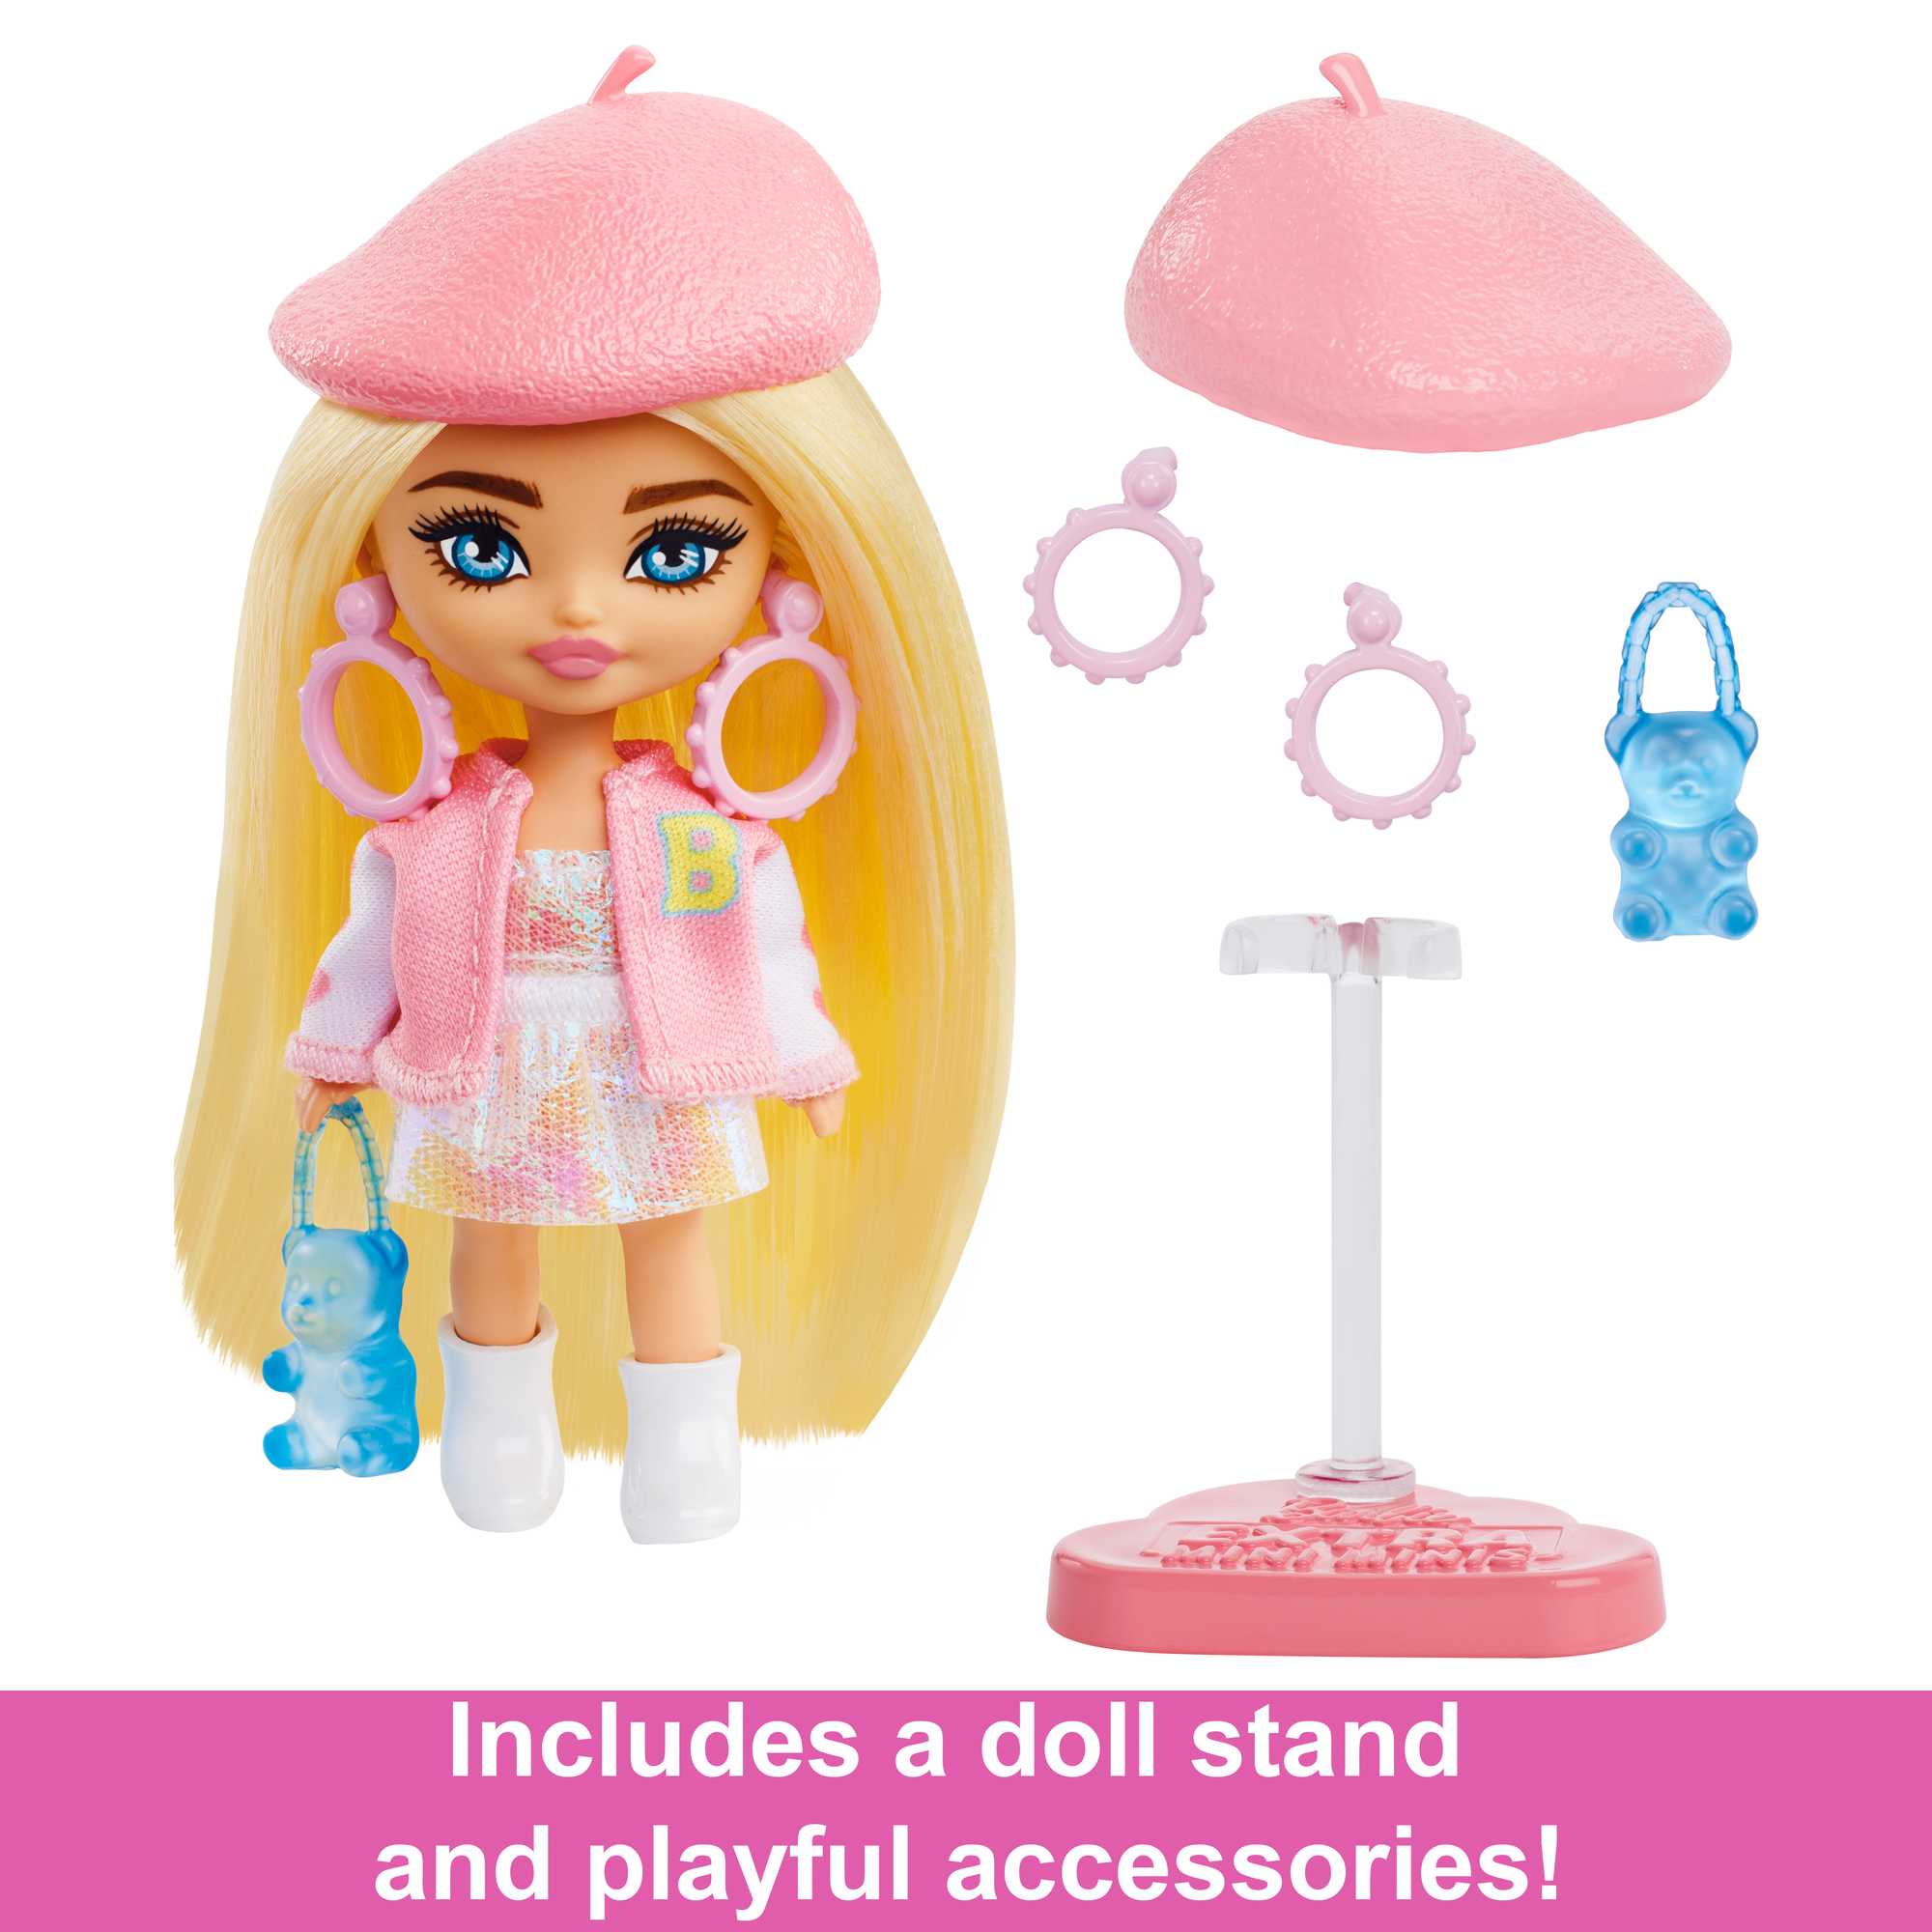 Muñeca Barbie Extra Minis serie 2 100 Original Mattel